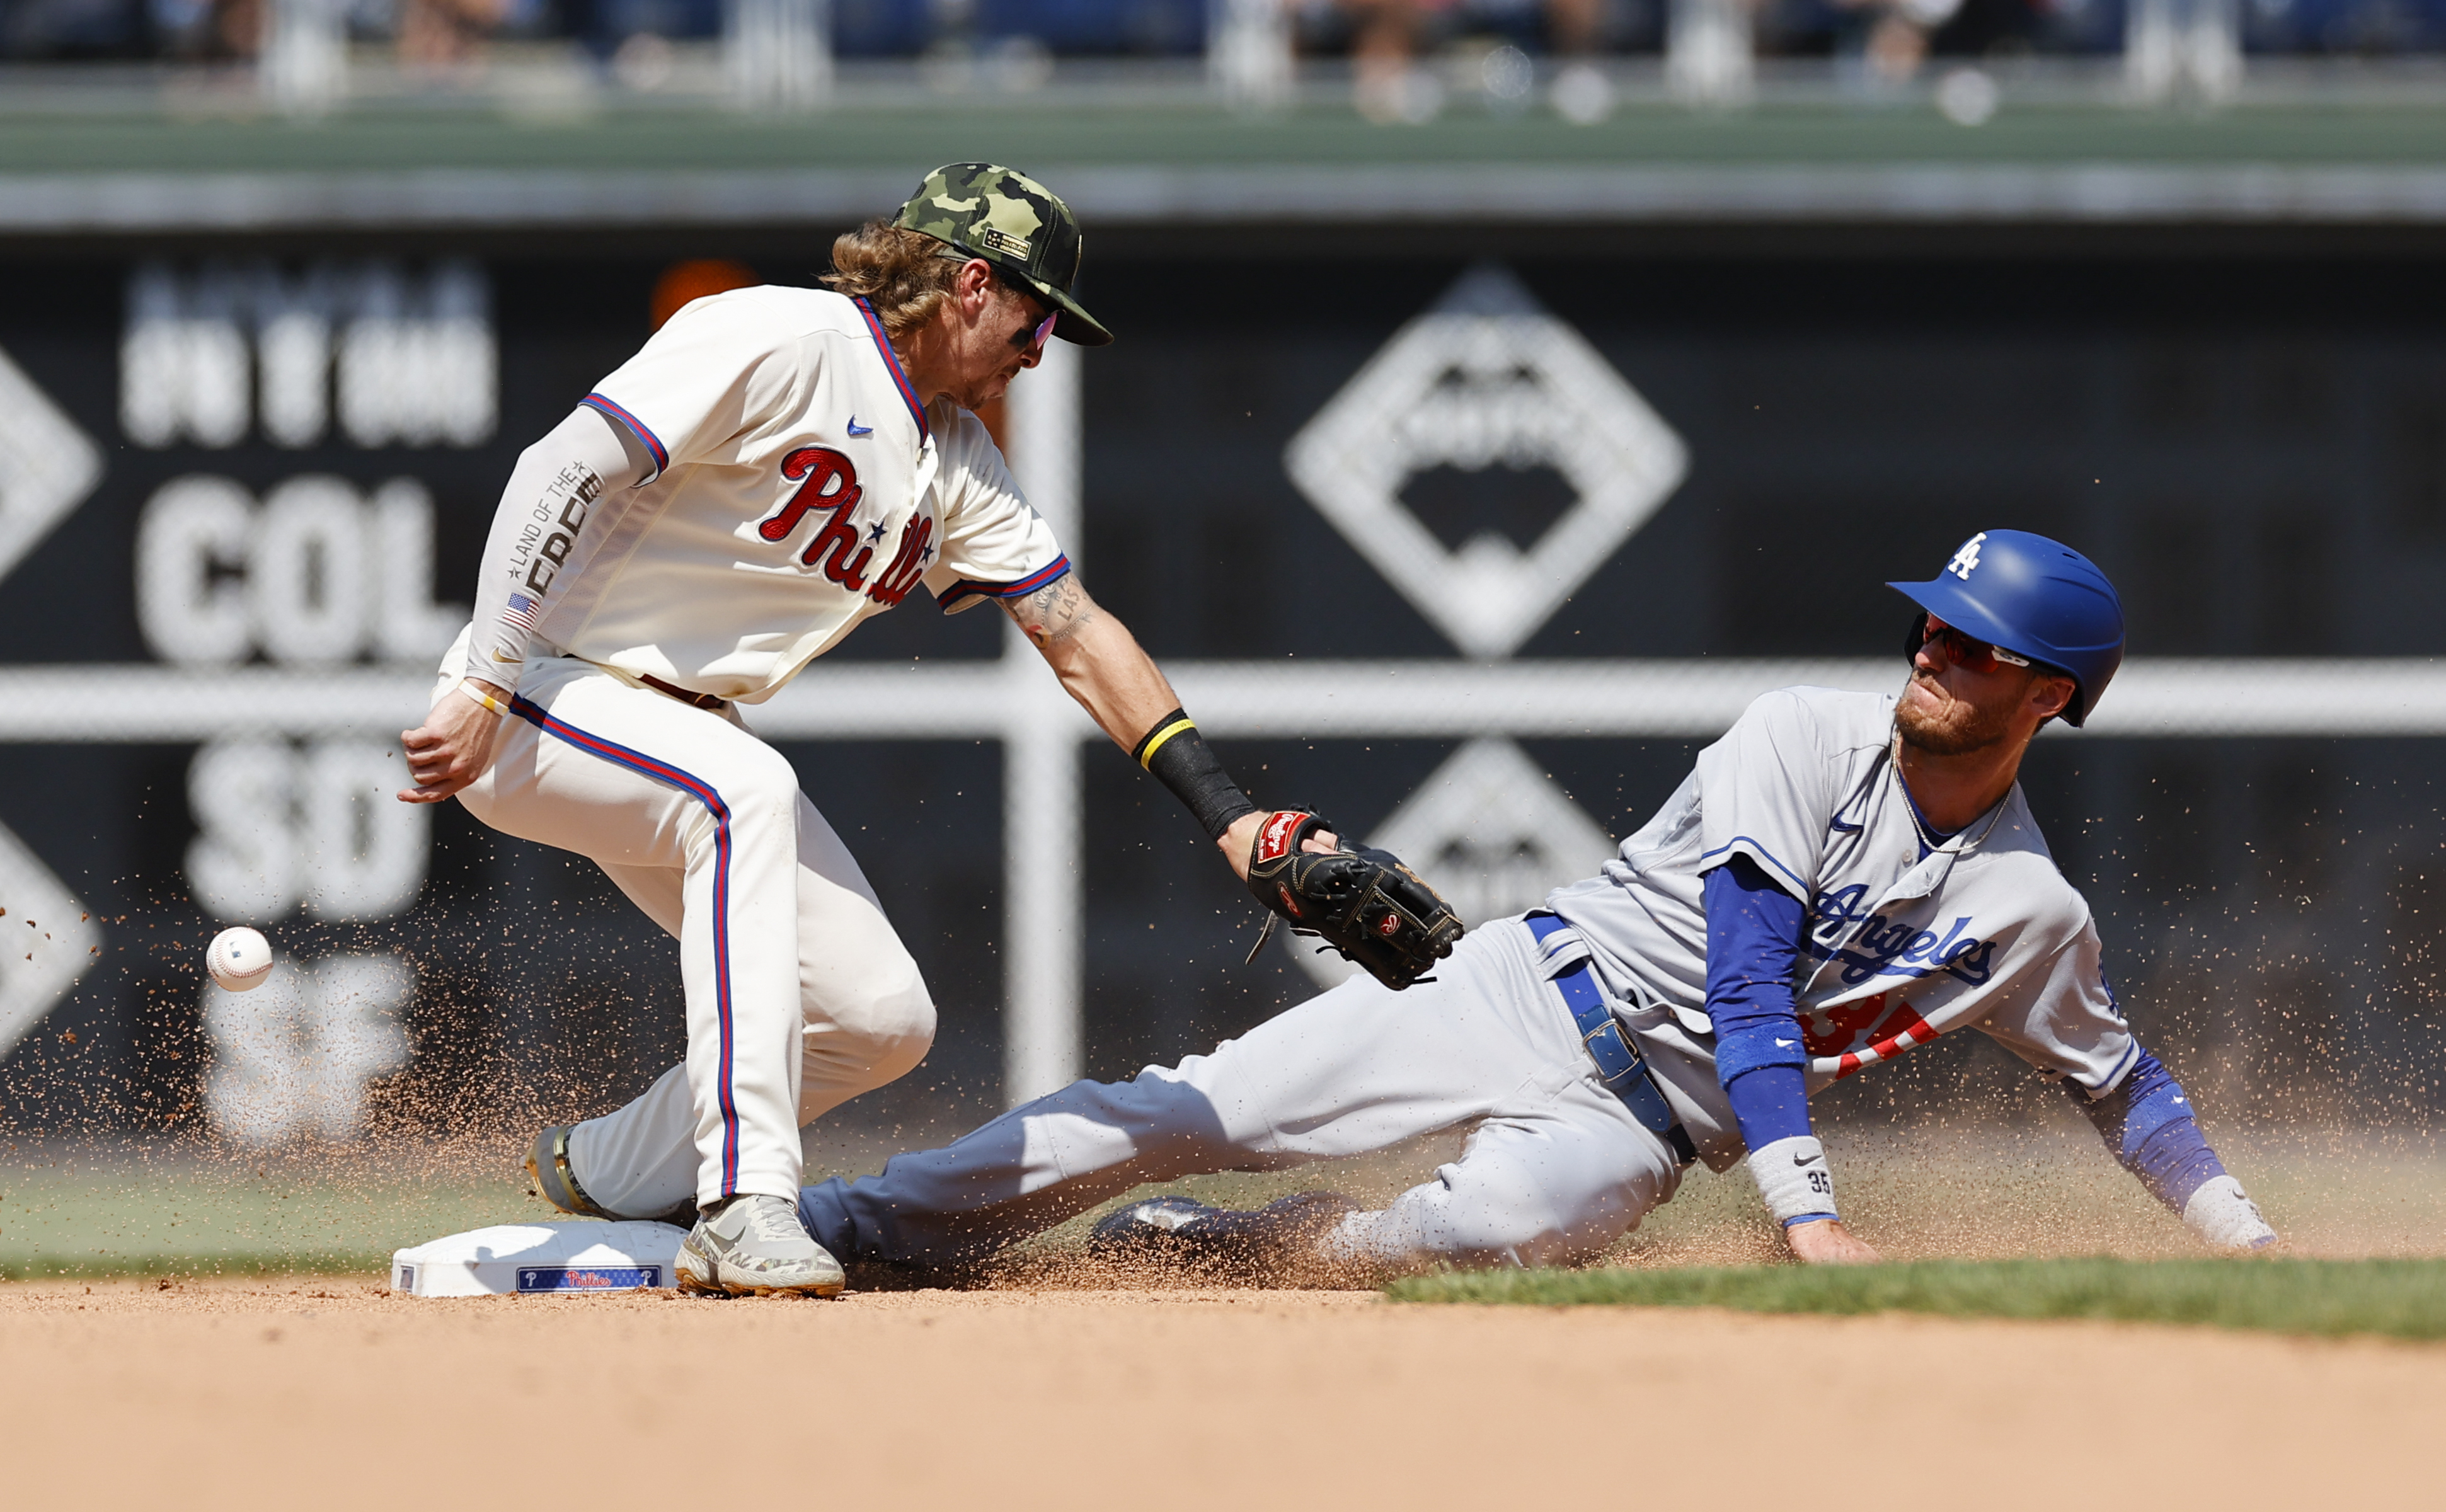 Phillies' Alec Bohm gets cut slamming bat in frustration vs. Angels